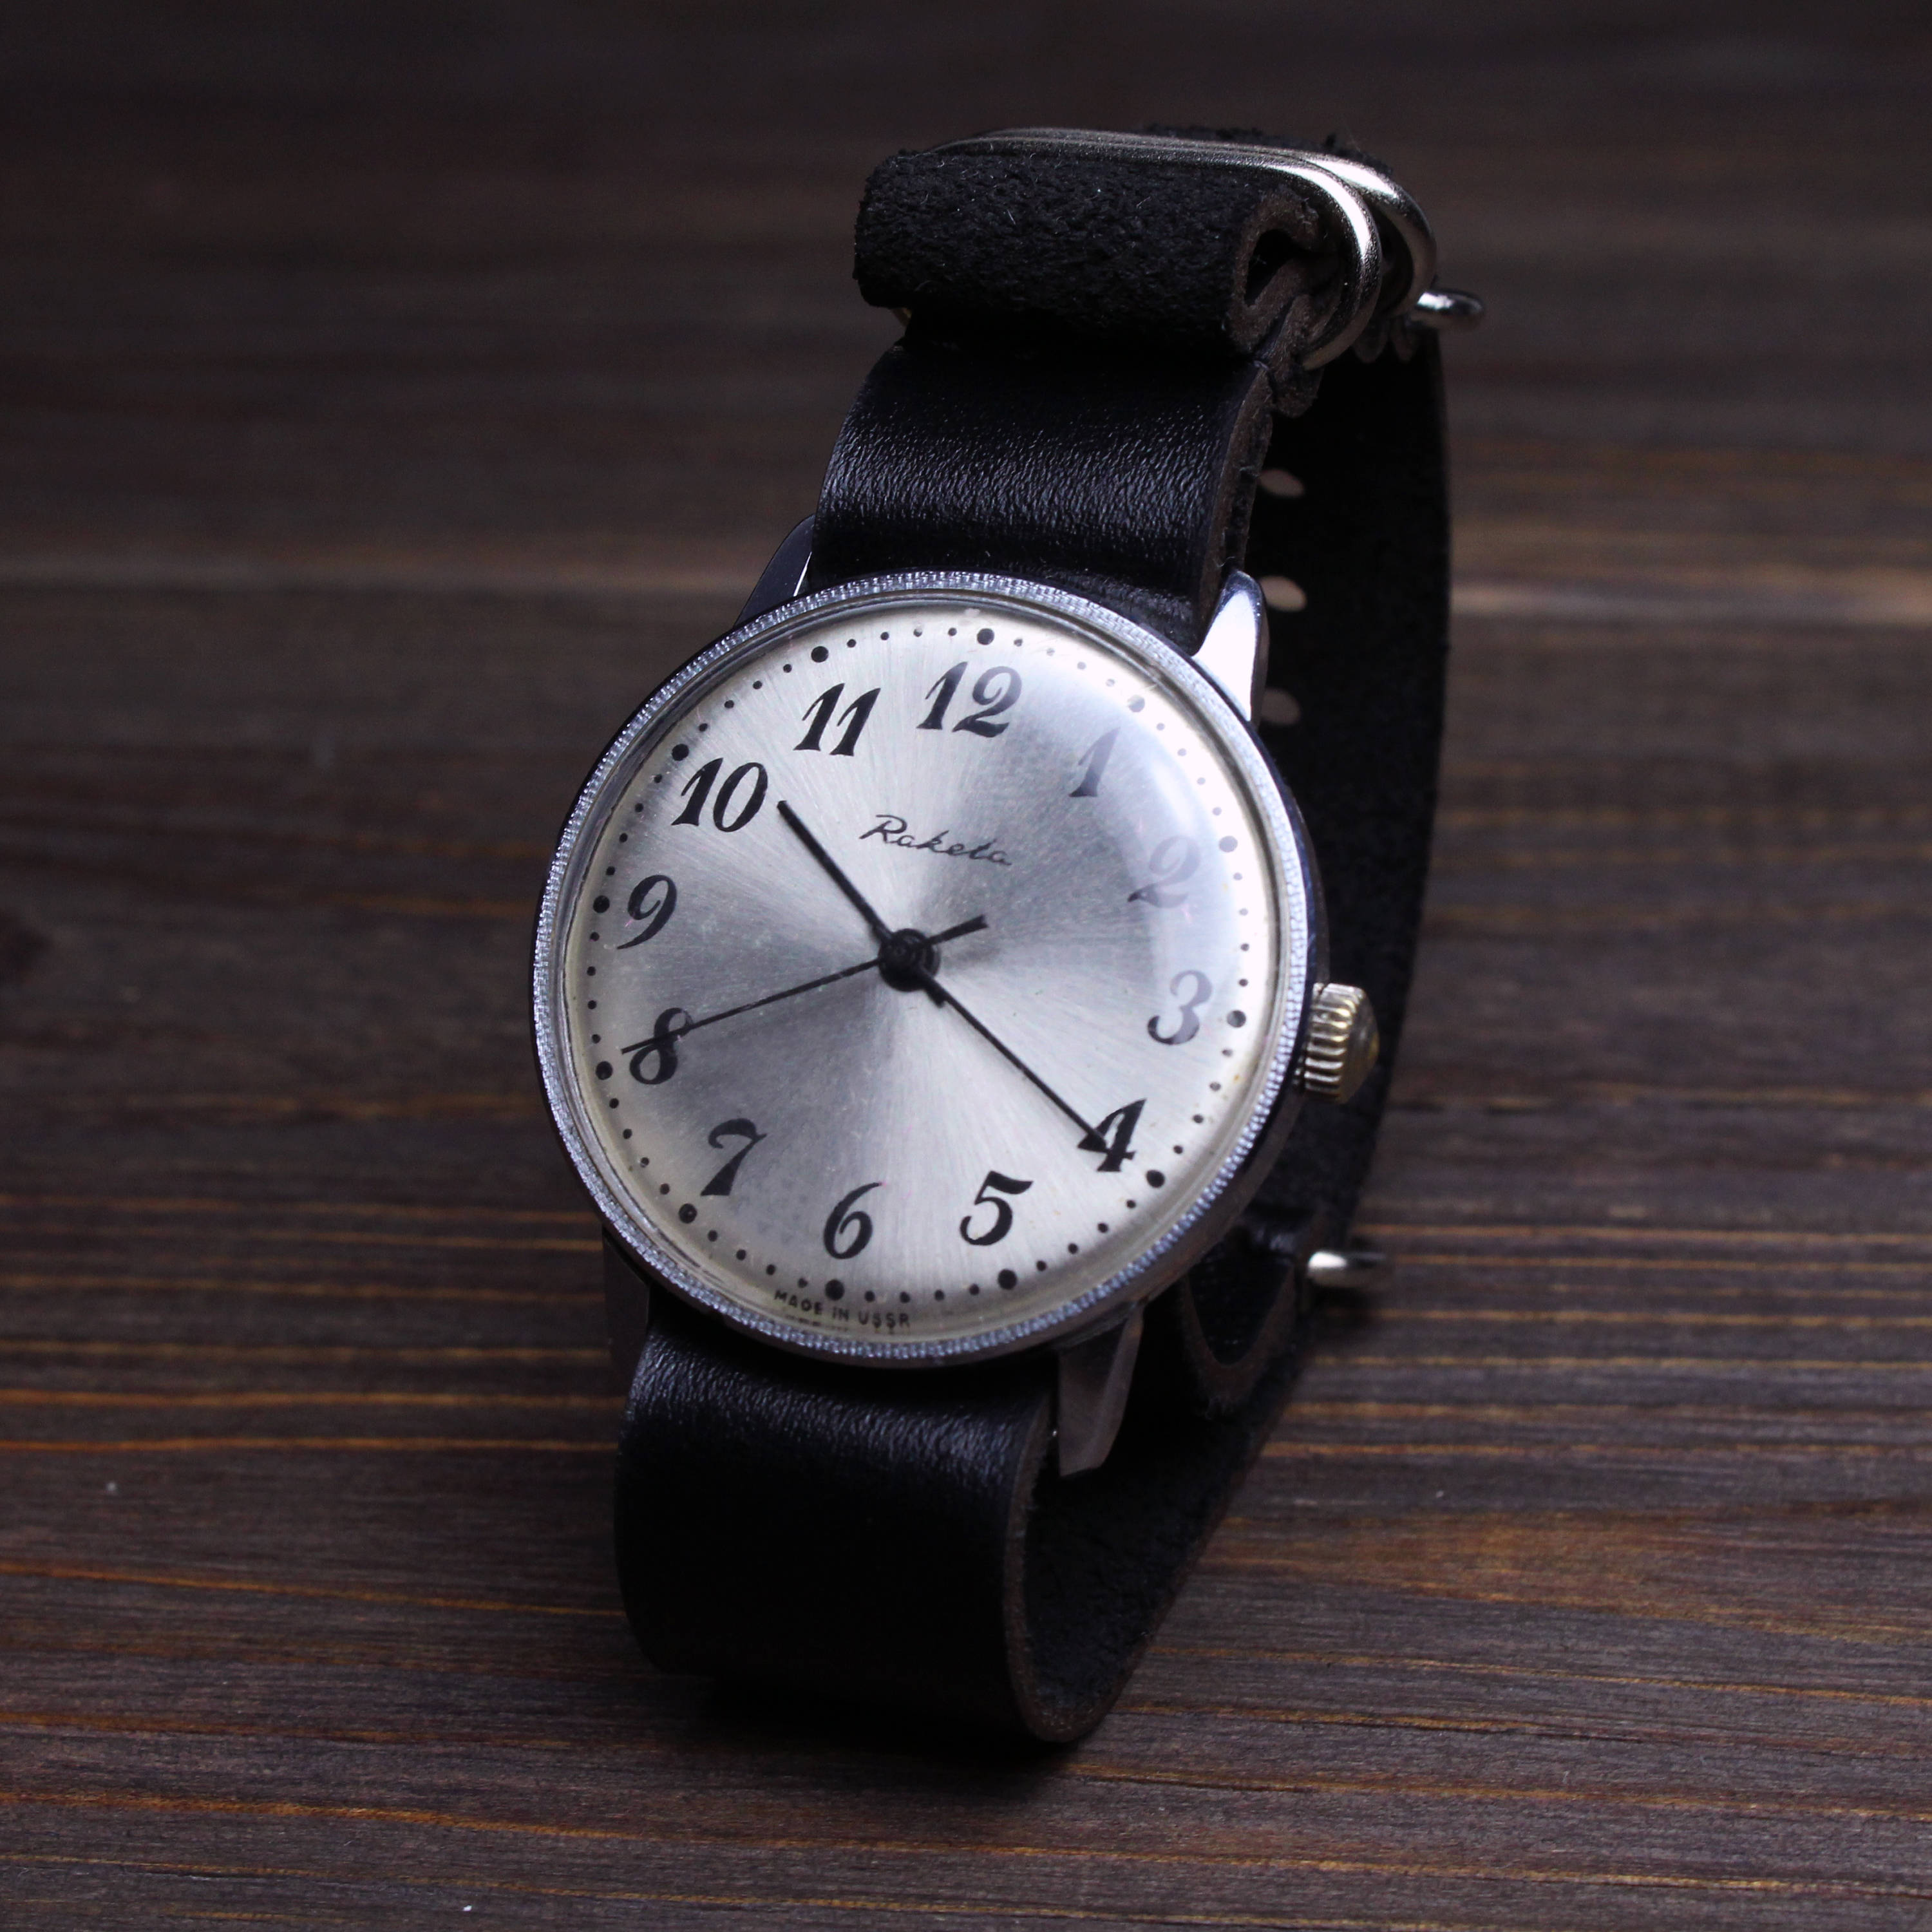 Soviet very rare minimalist vintage unisex watch Raketa with leather nato strap